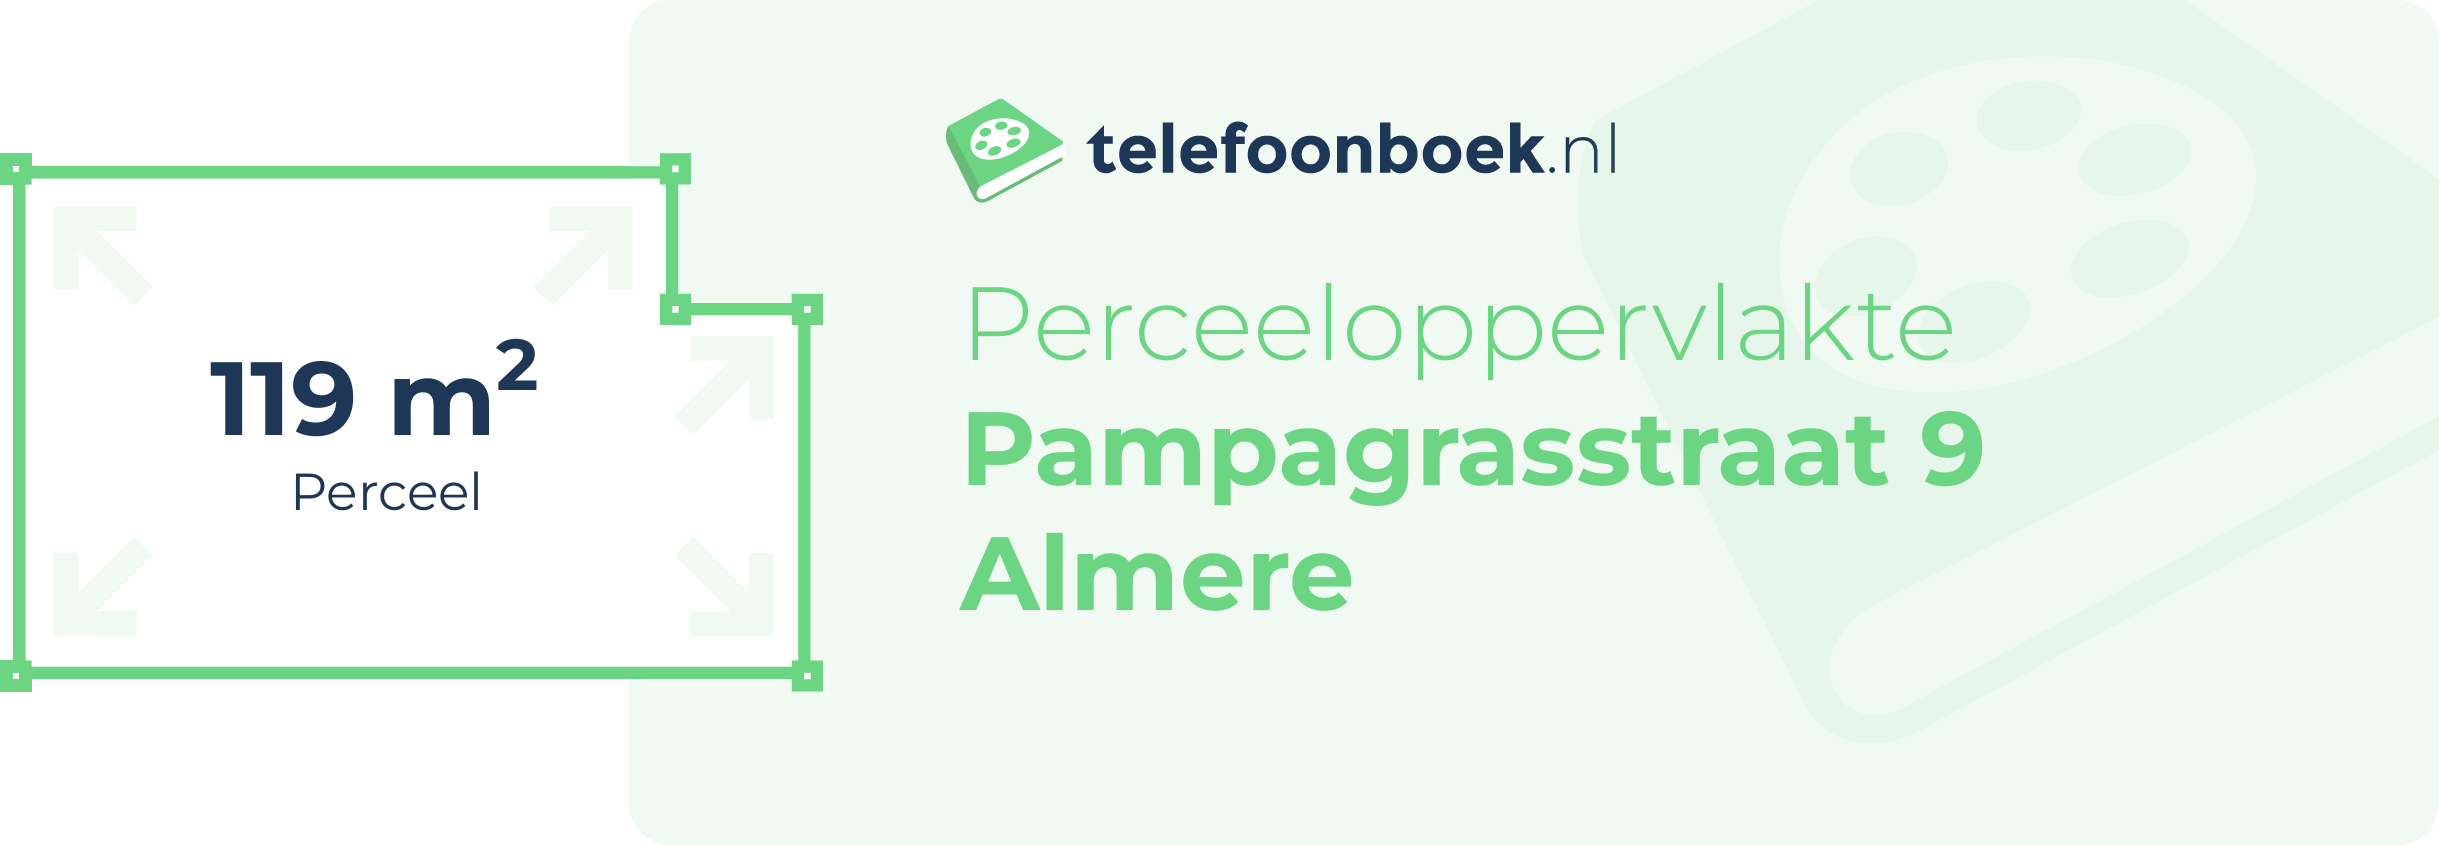 Perceeloppervlakte Pampagrasstraat 9 Almere